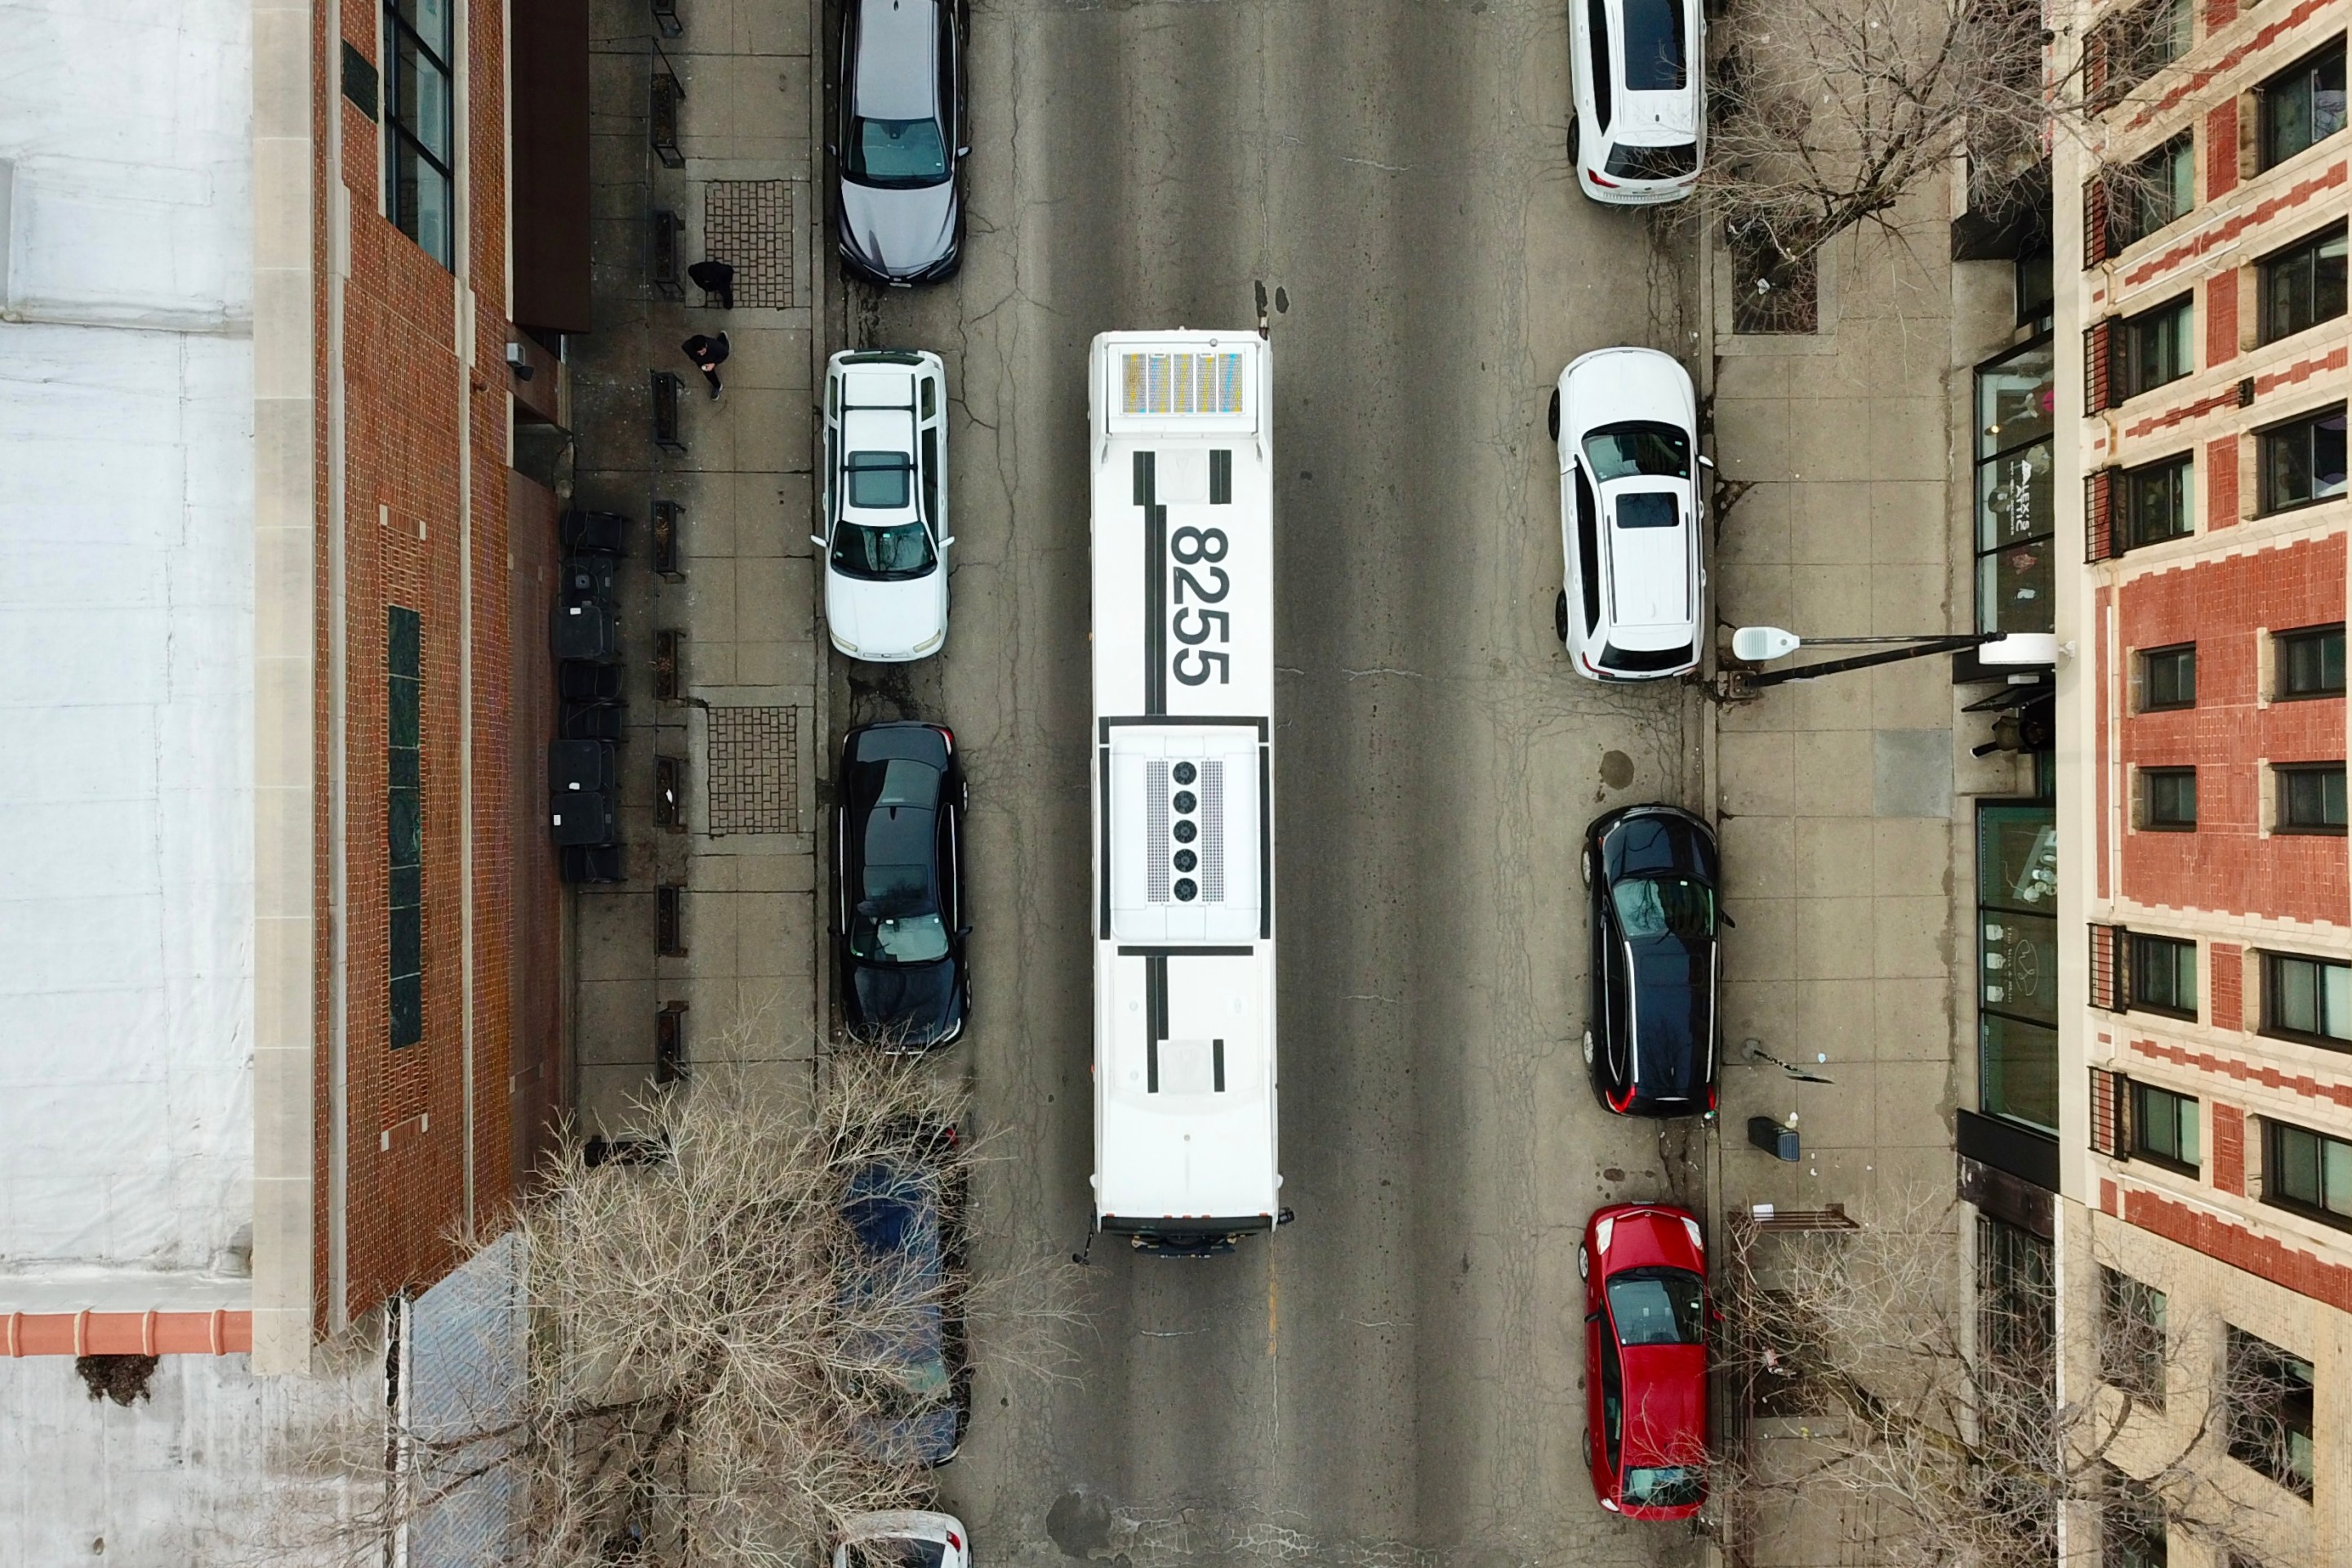 A bus on Milwaukee Avenue seen from the sky